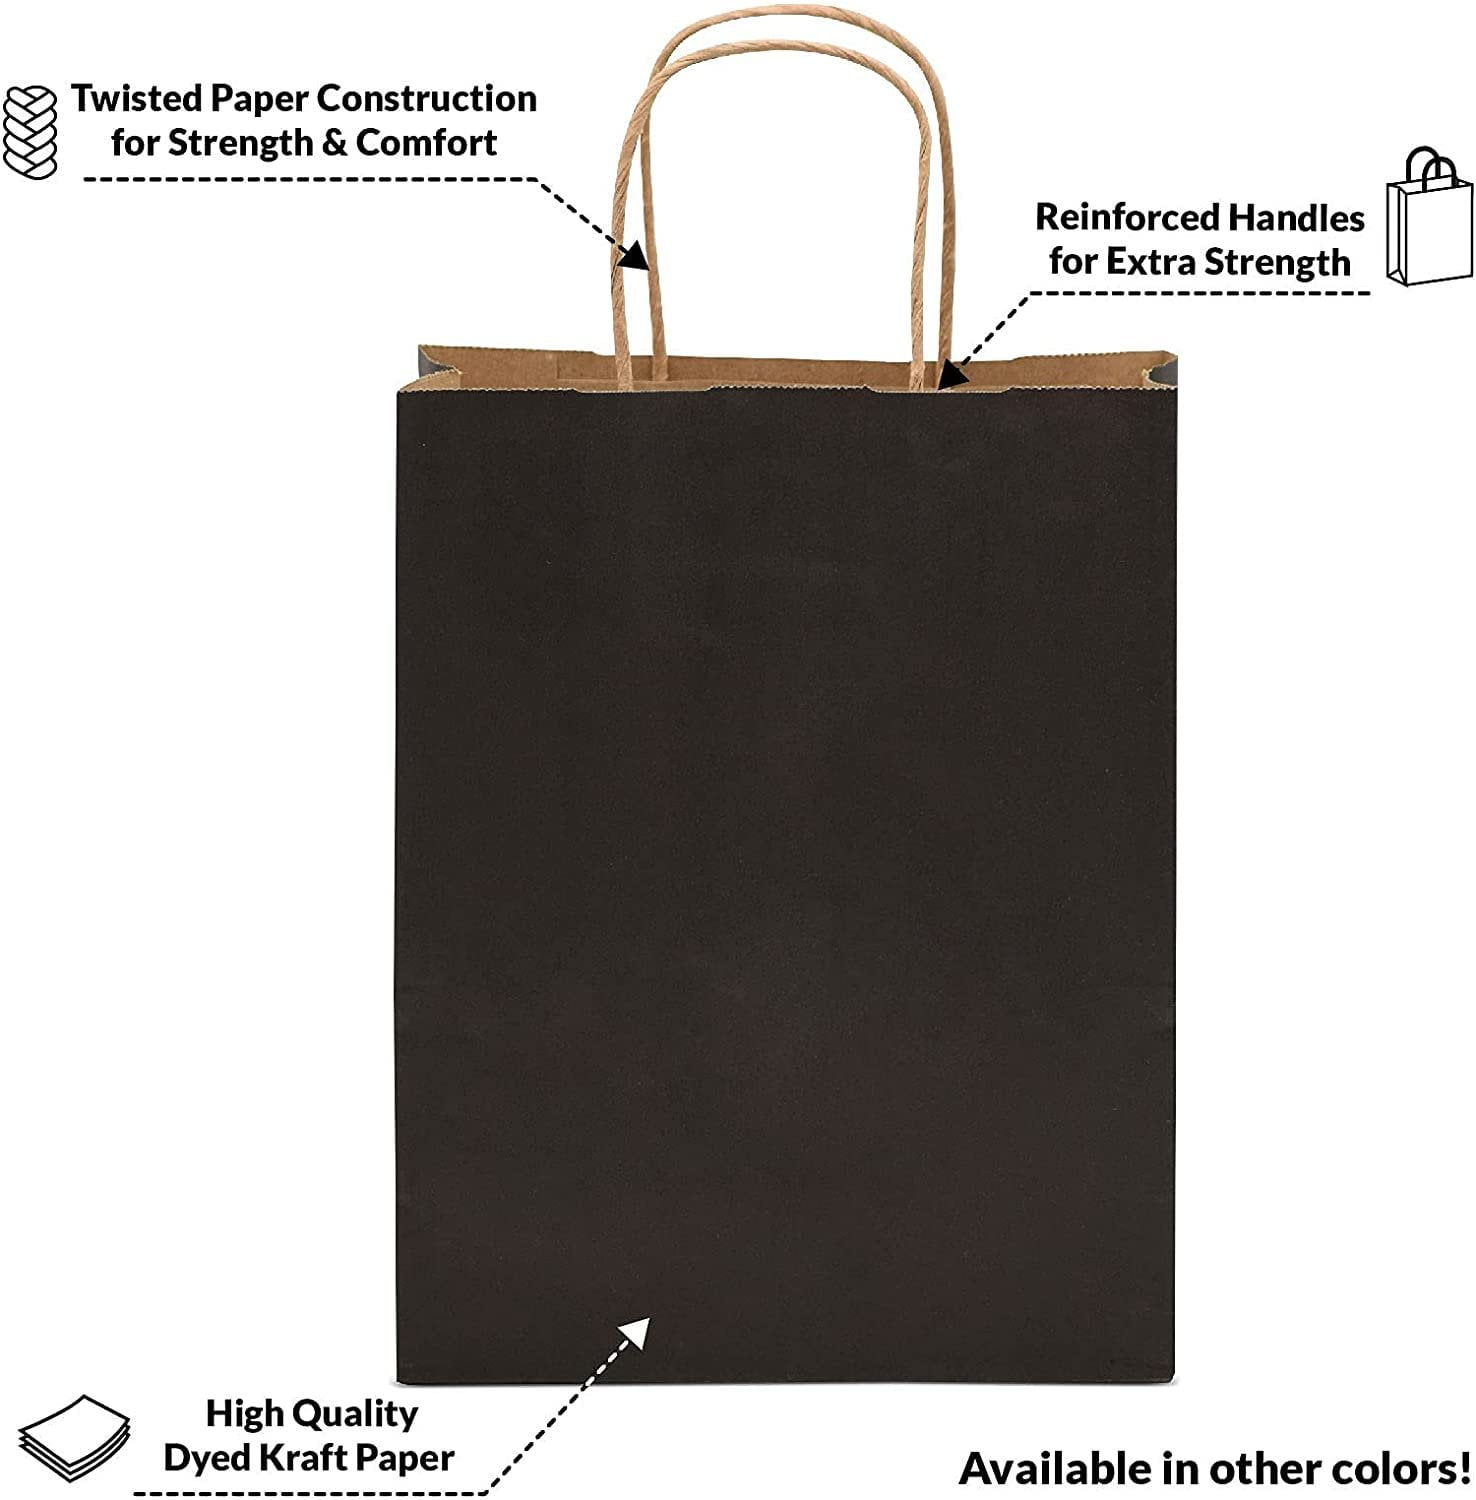 1 Unit Black Plastic Bags Bulk 3 Mil Shopping Bags 8x4x10 inch Unit Pack 200